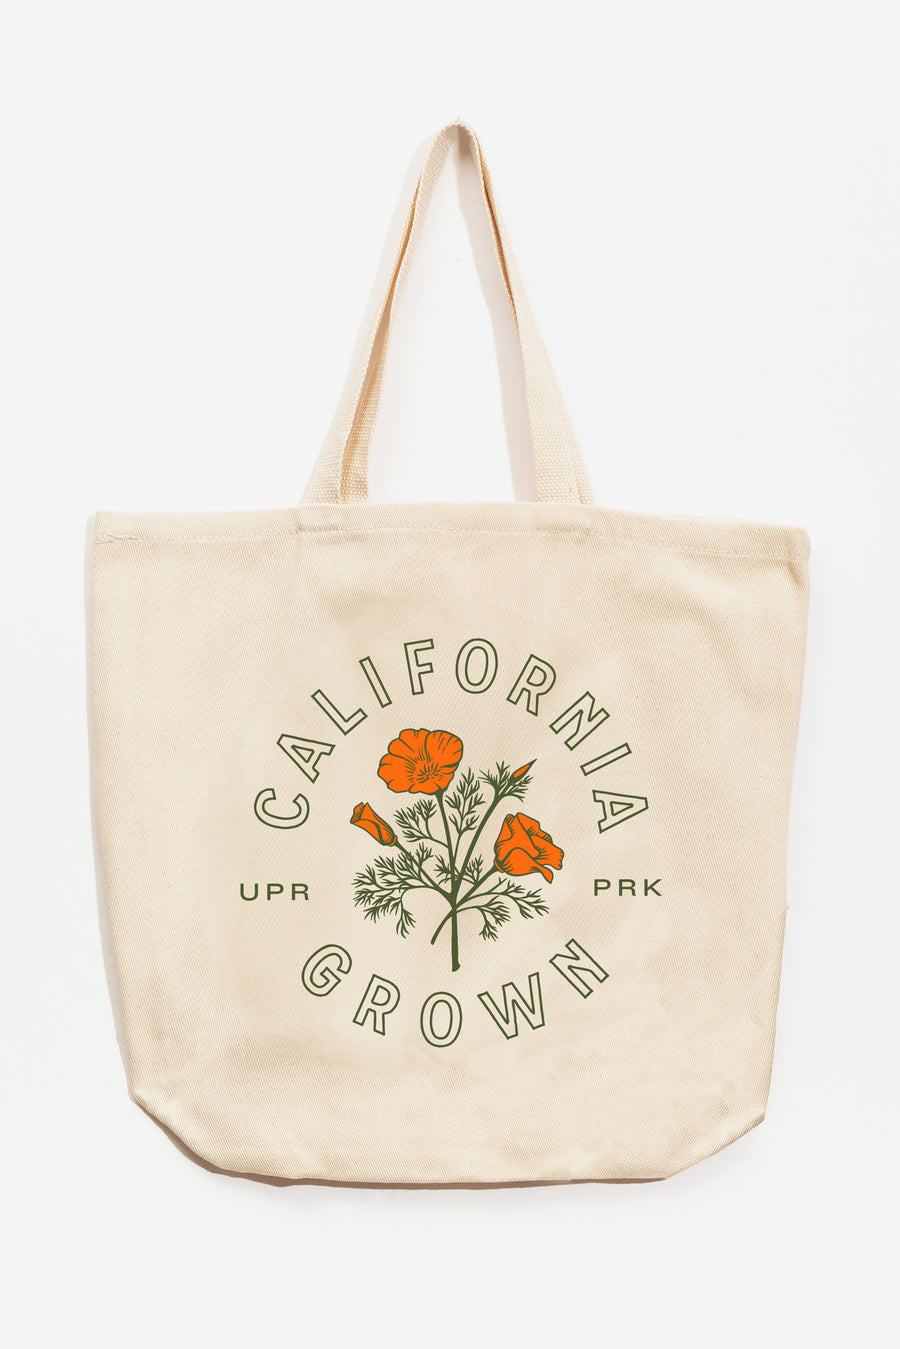 California Grown Tote Bag - Upper Park - Chico CA